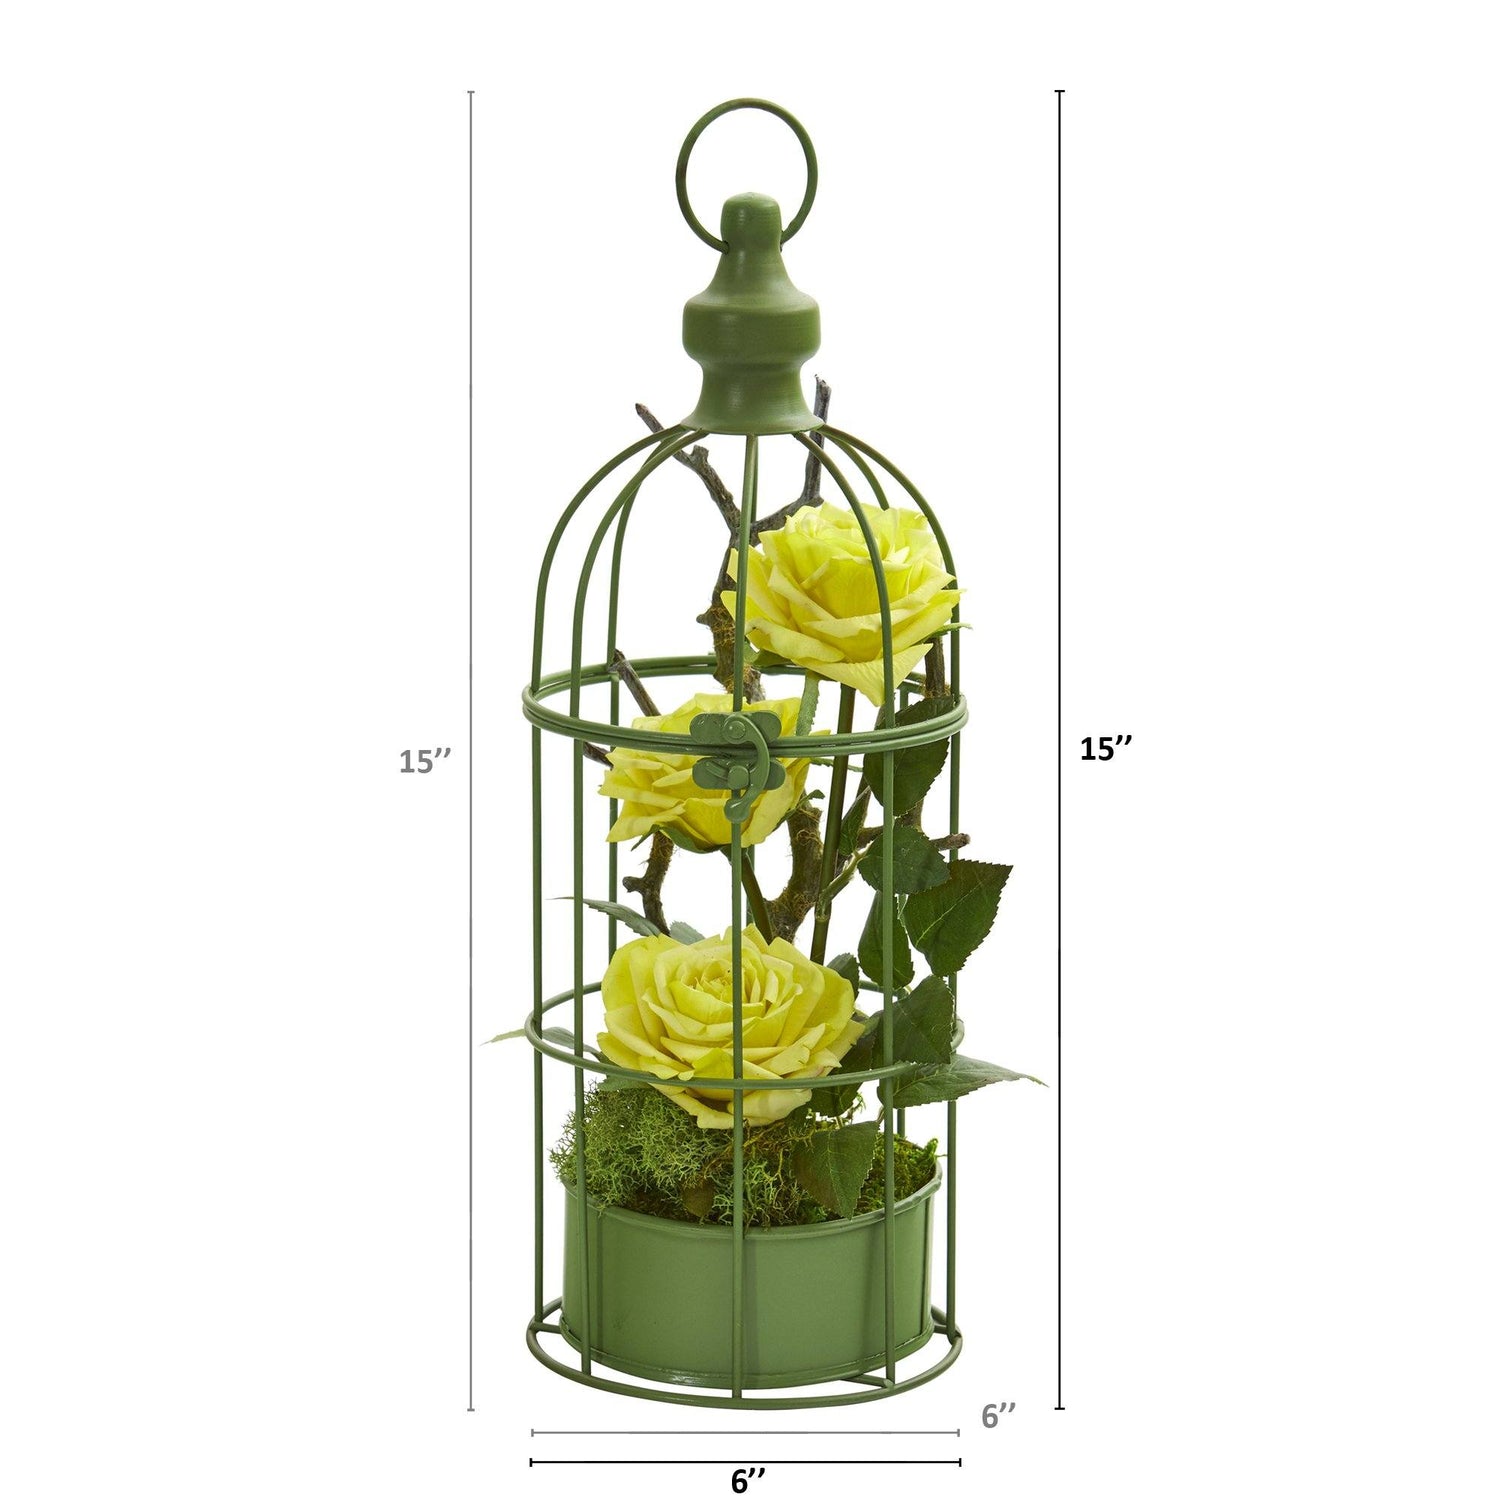 15” Triple Rose Artificial Arrangement in Decorative Cage